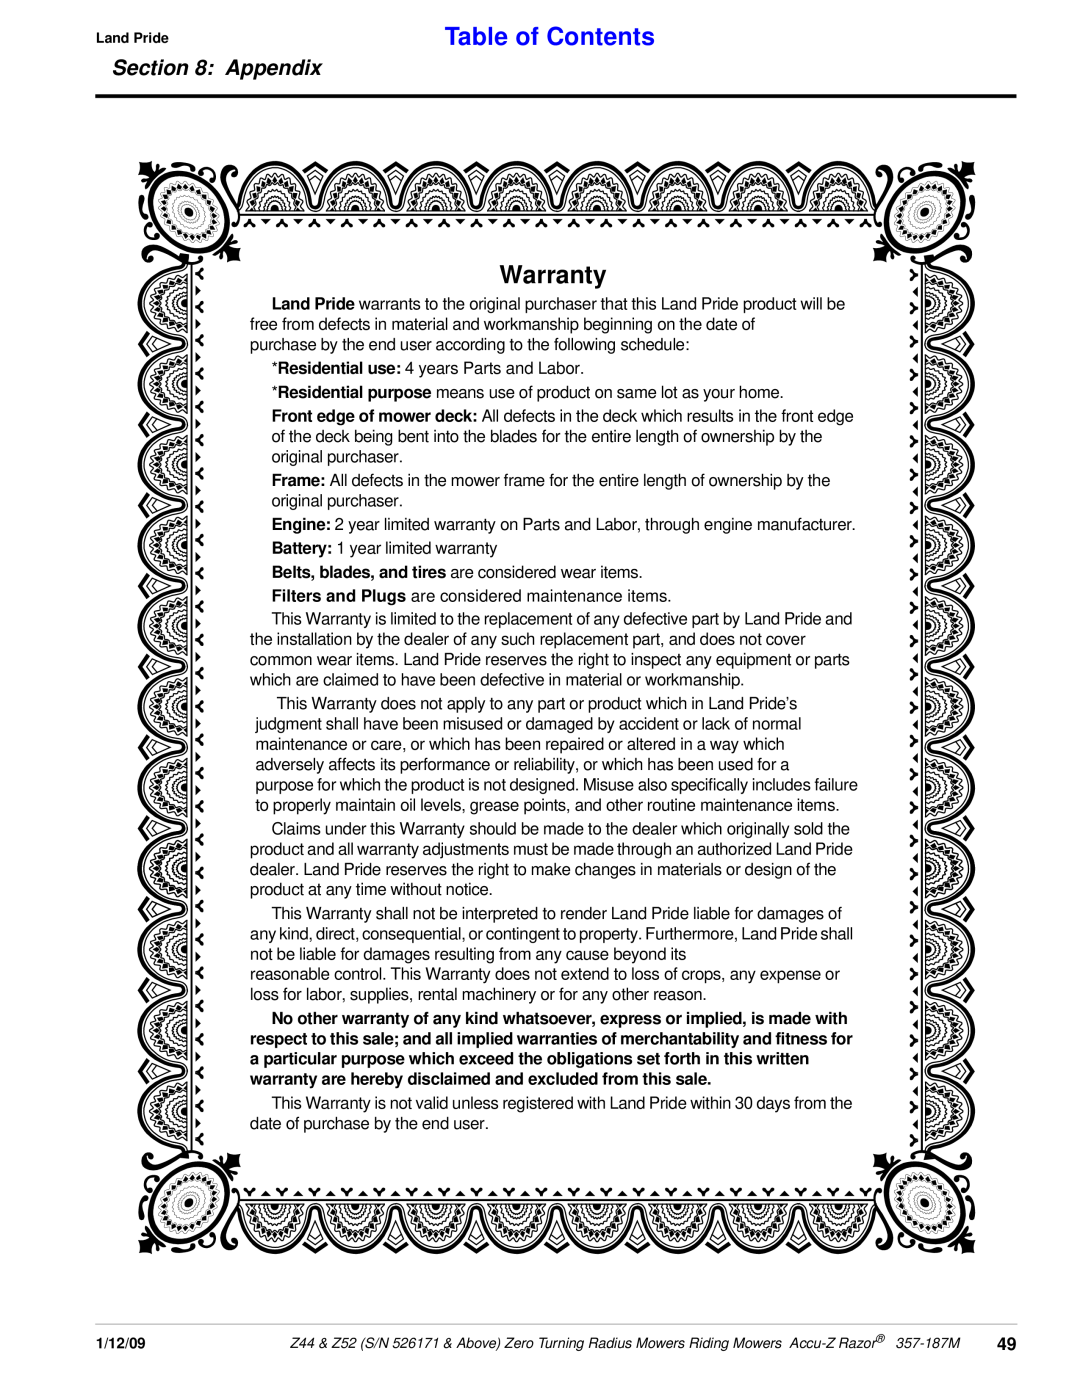 Land Pride 357-187M manual Warranty, Table of Contents, Appendix 